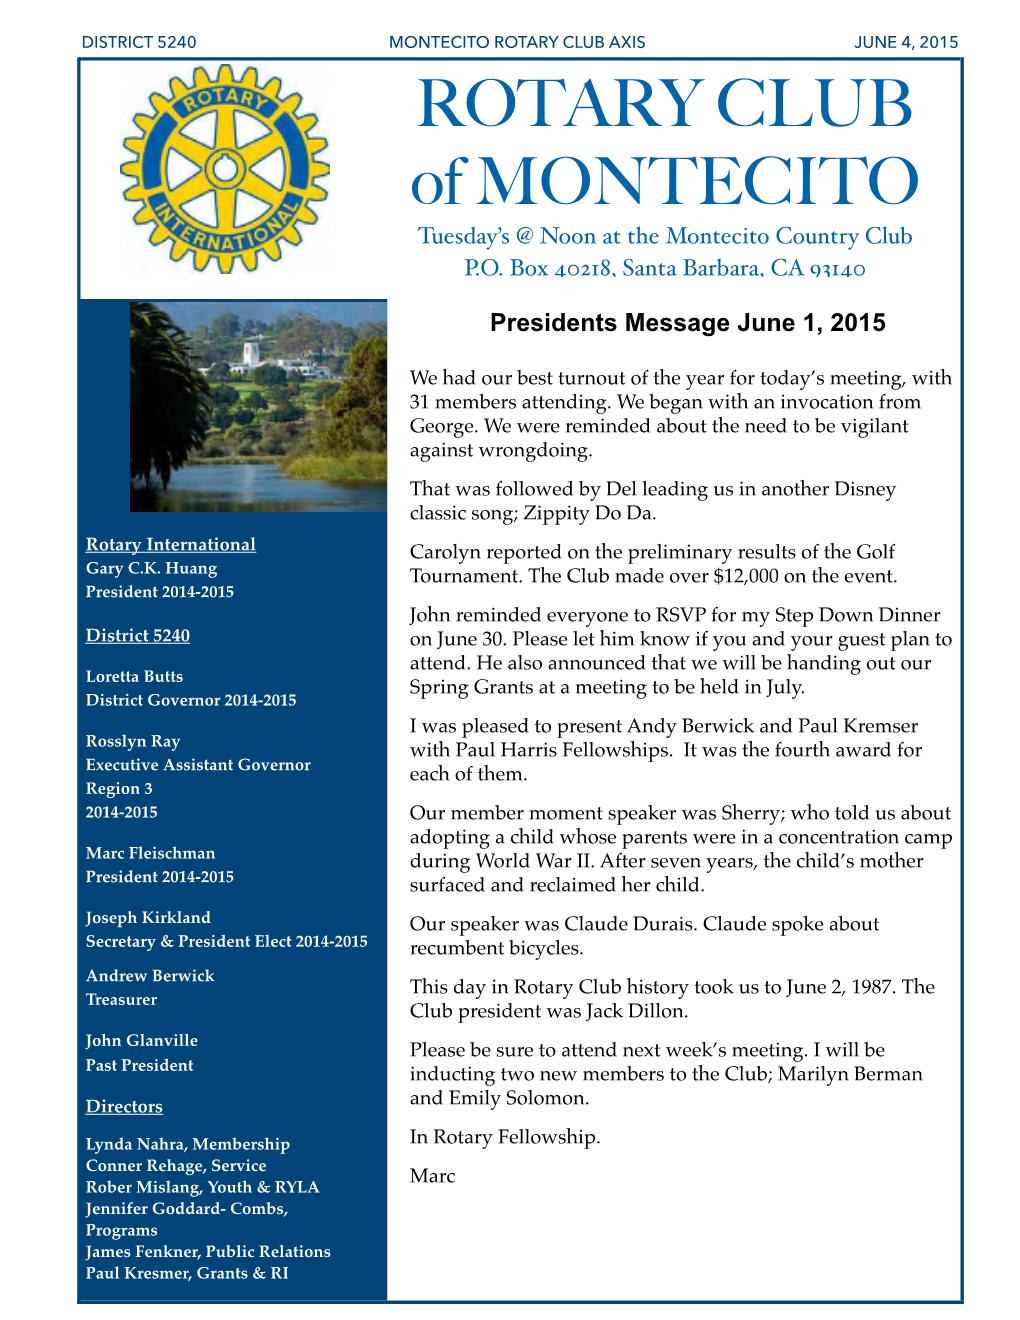 Montecito Rotary Club Newsletter Template